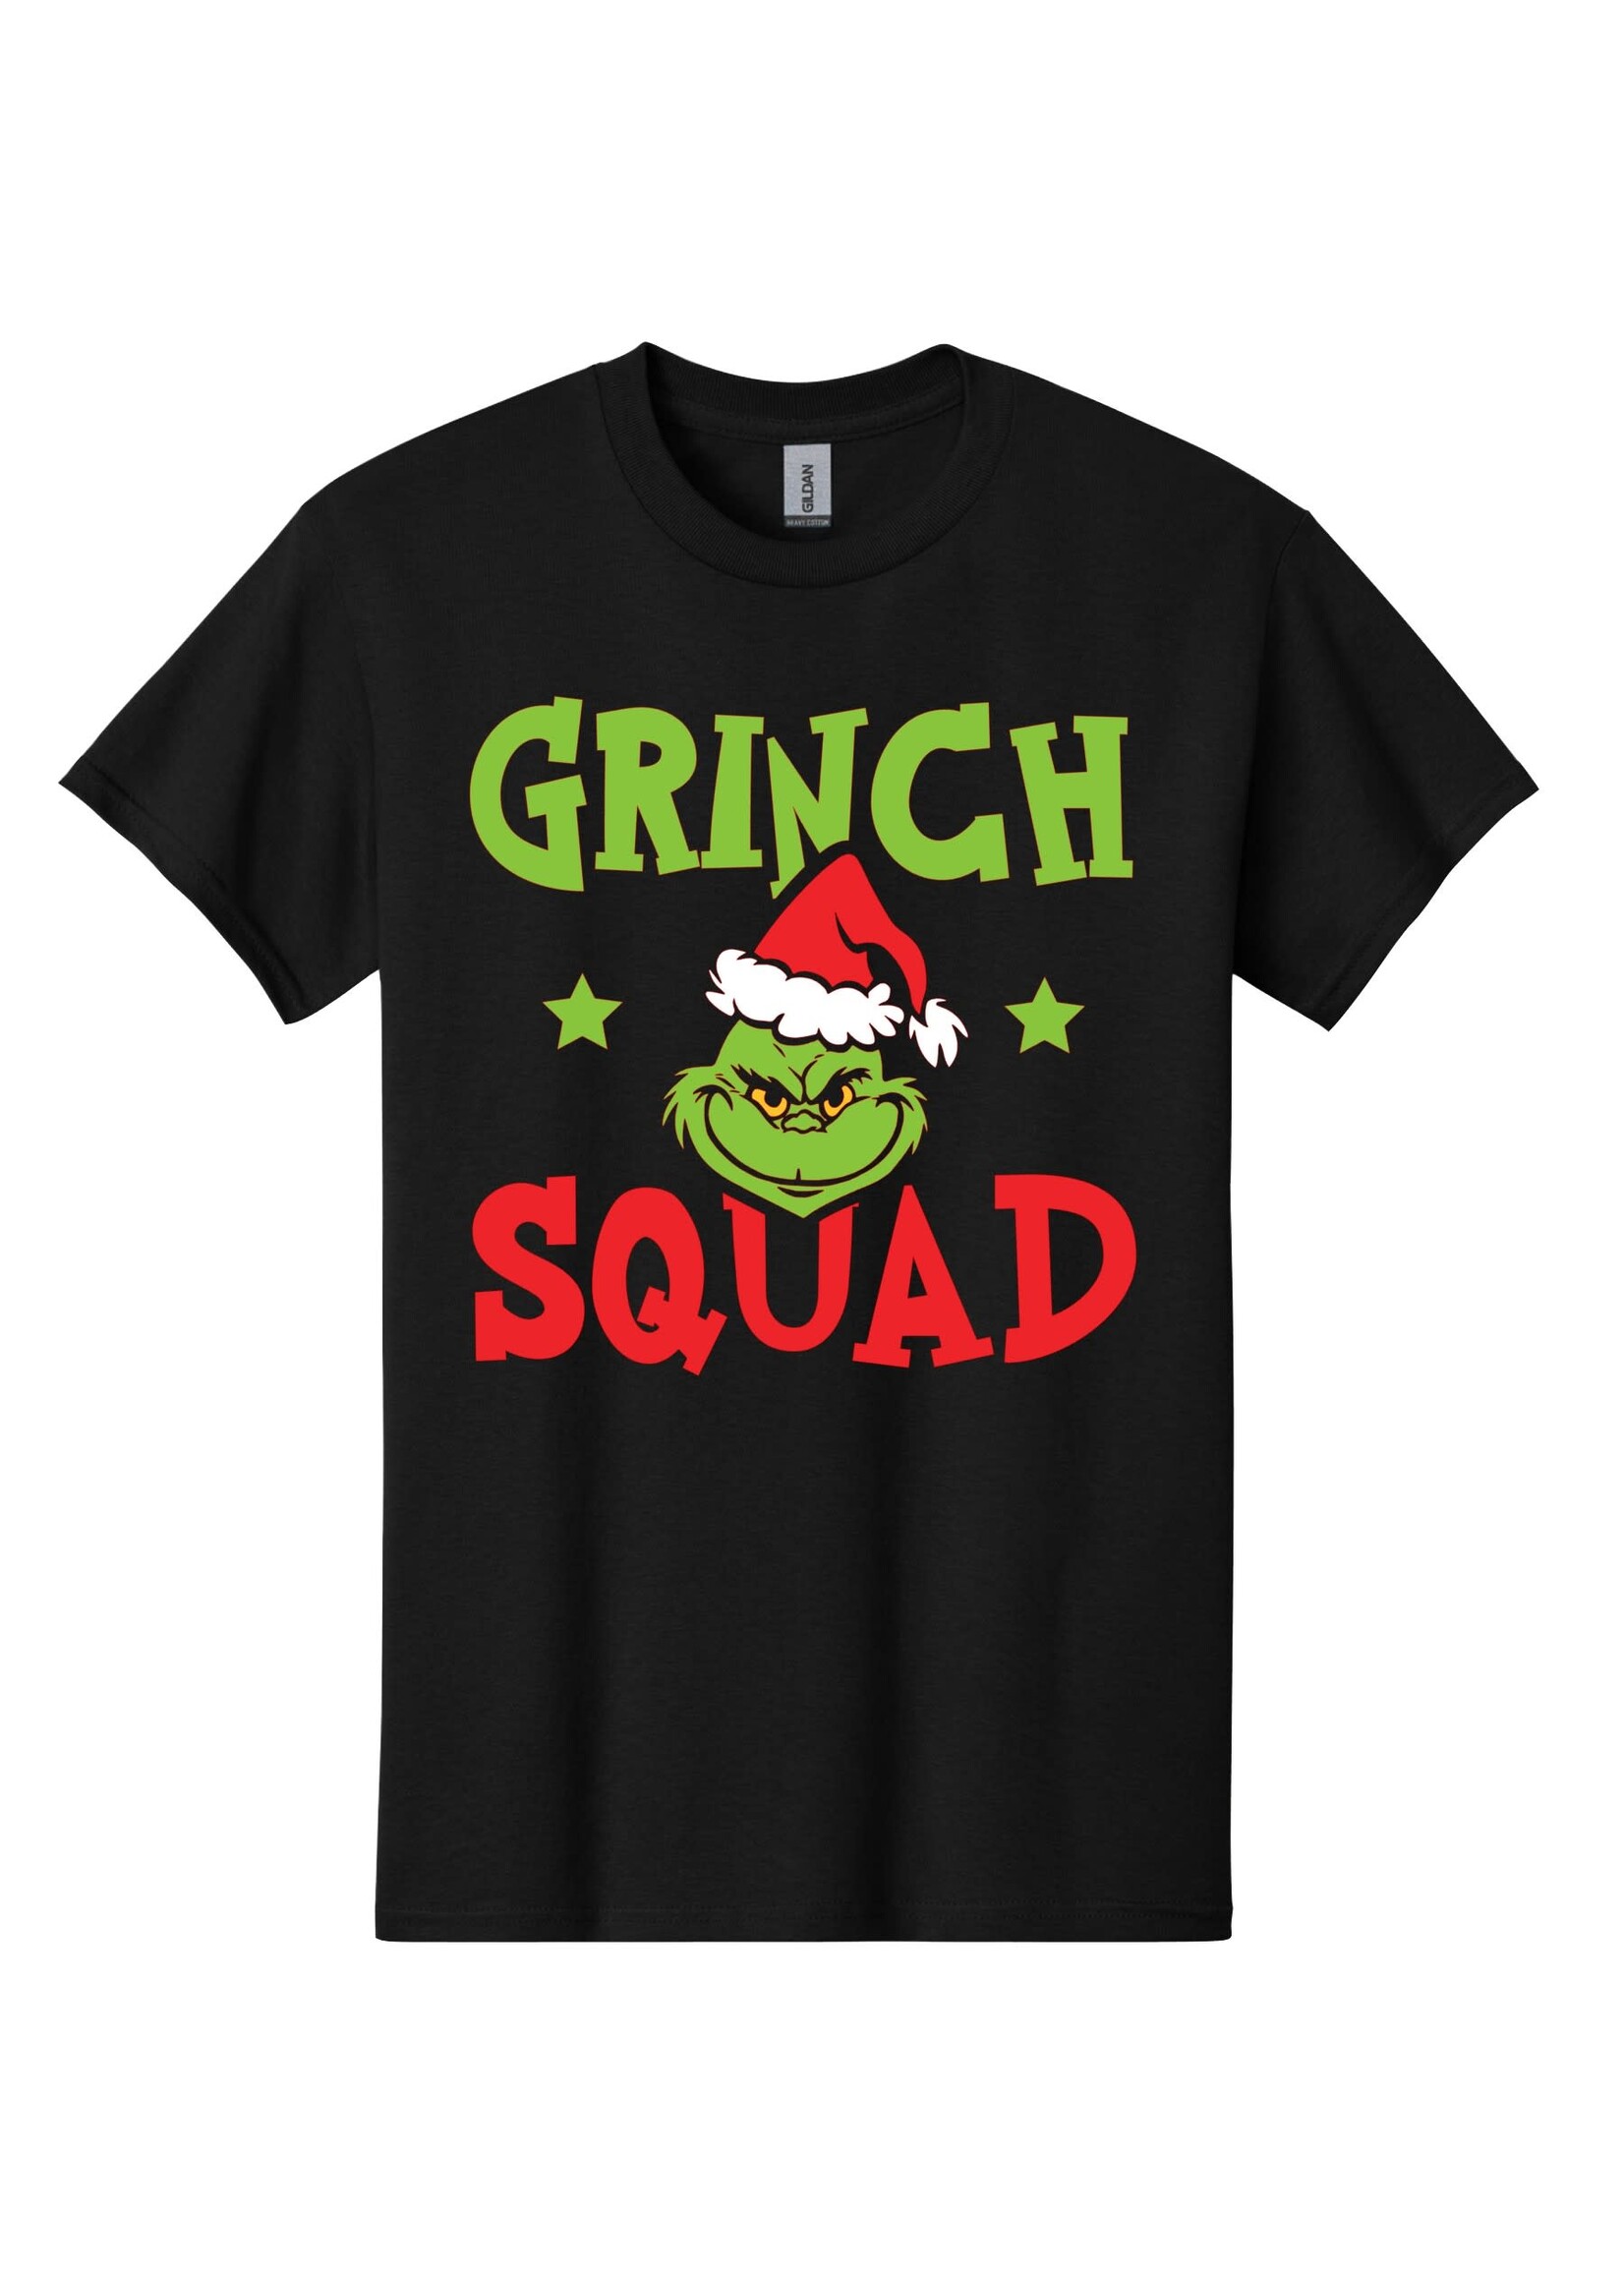 Grinch Squad T-shirt